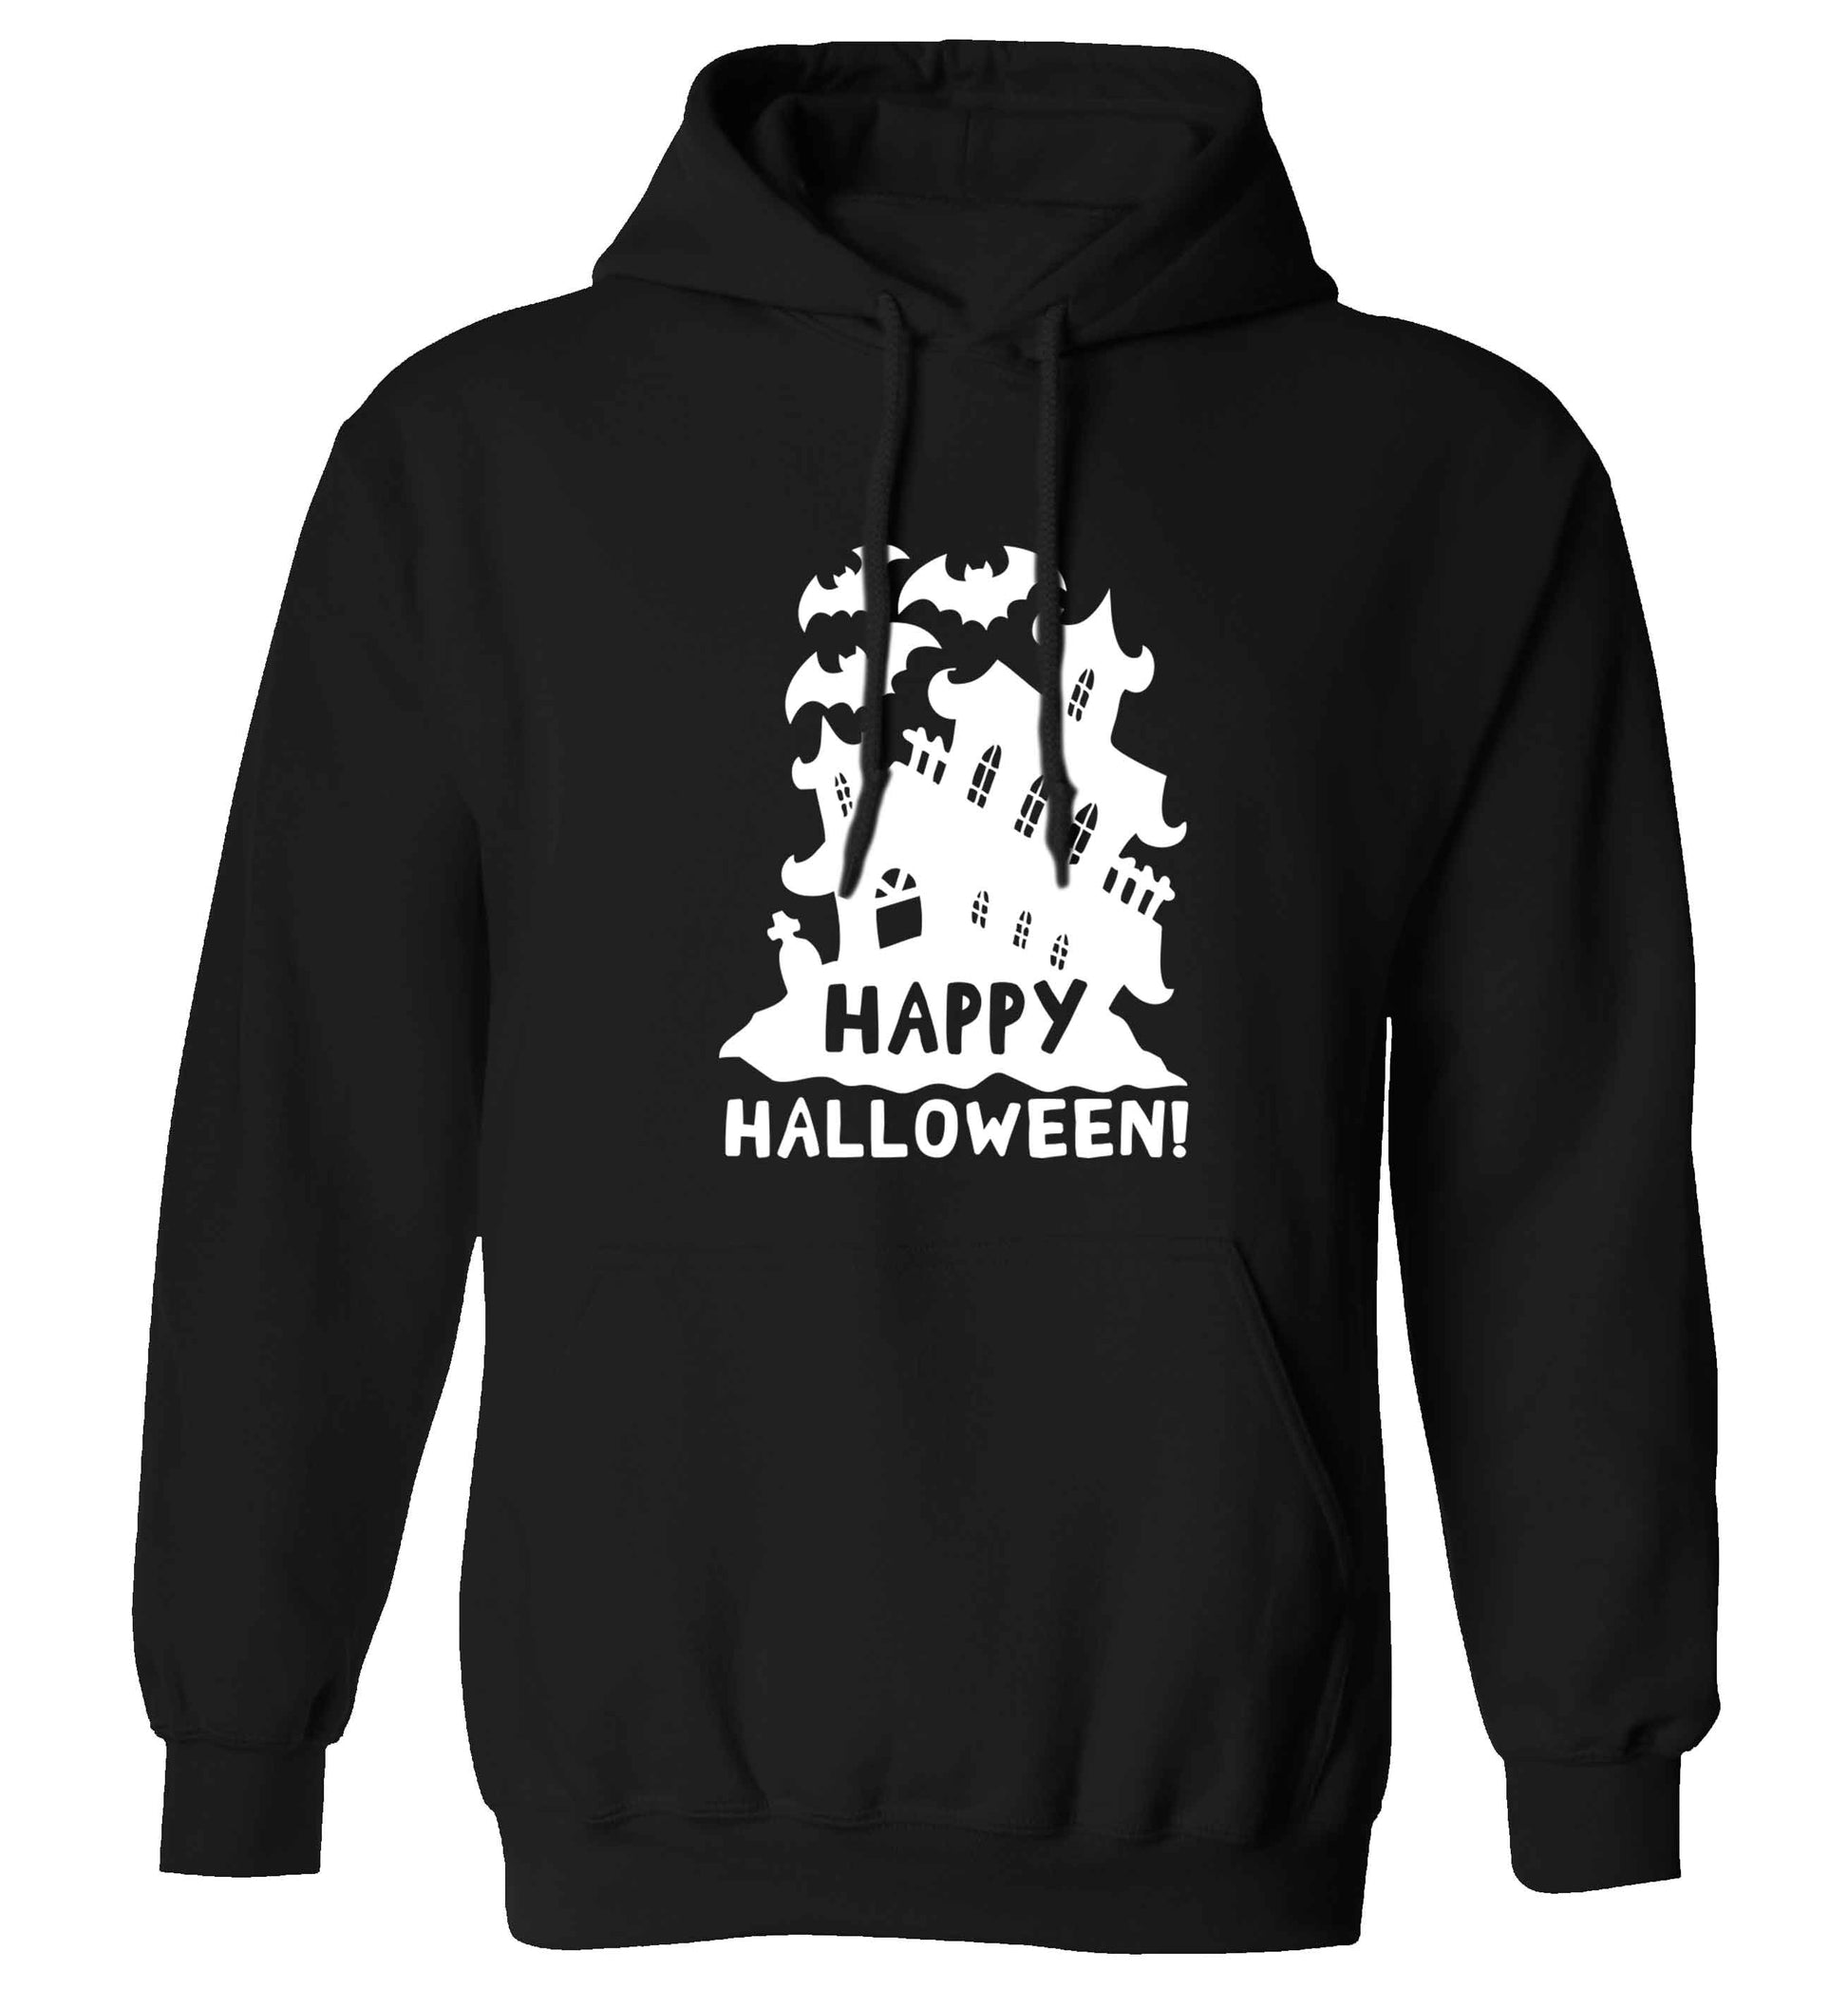 Happy halloween - haunted house adults unisex black hoodie 2XL